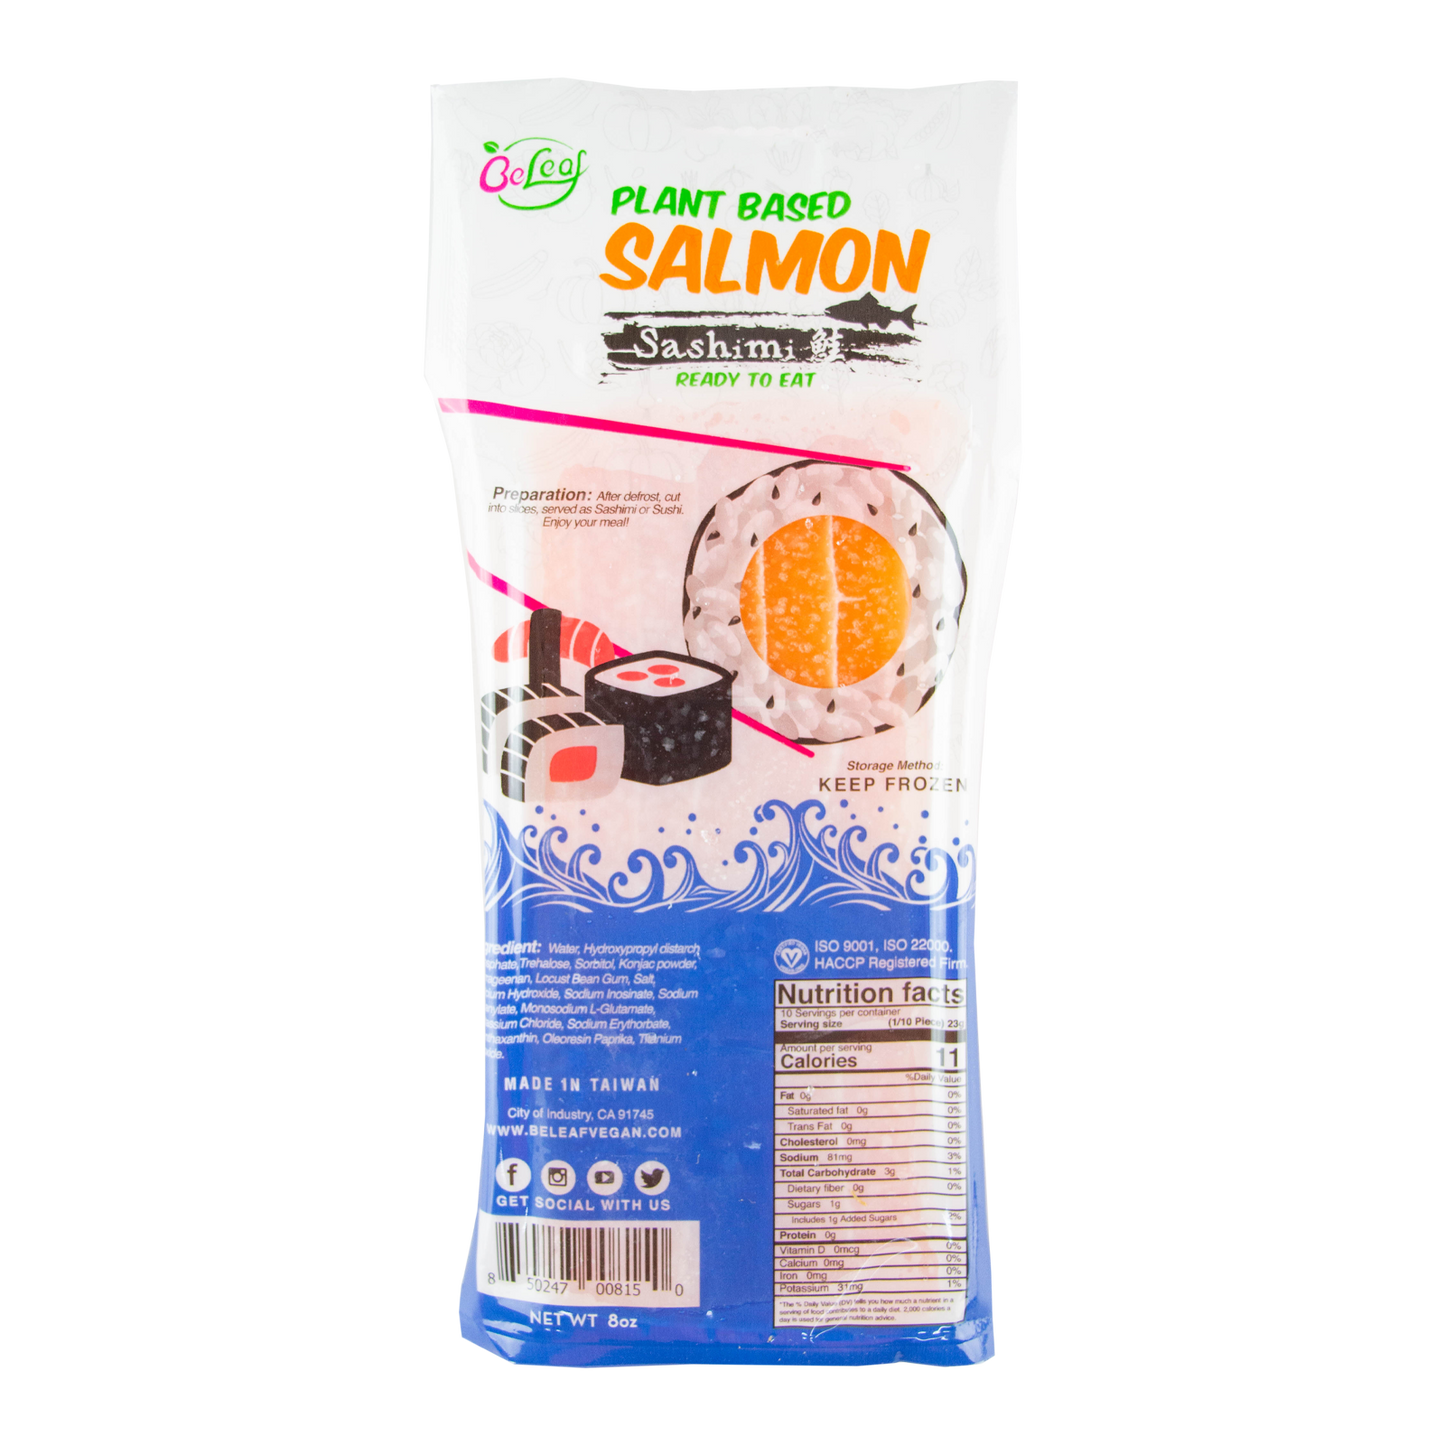 Be Leaf - Plant Based Sashimi Salmon - 8 oz (Store Pick-Up Only)